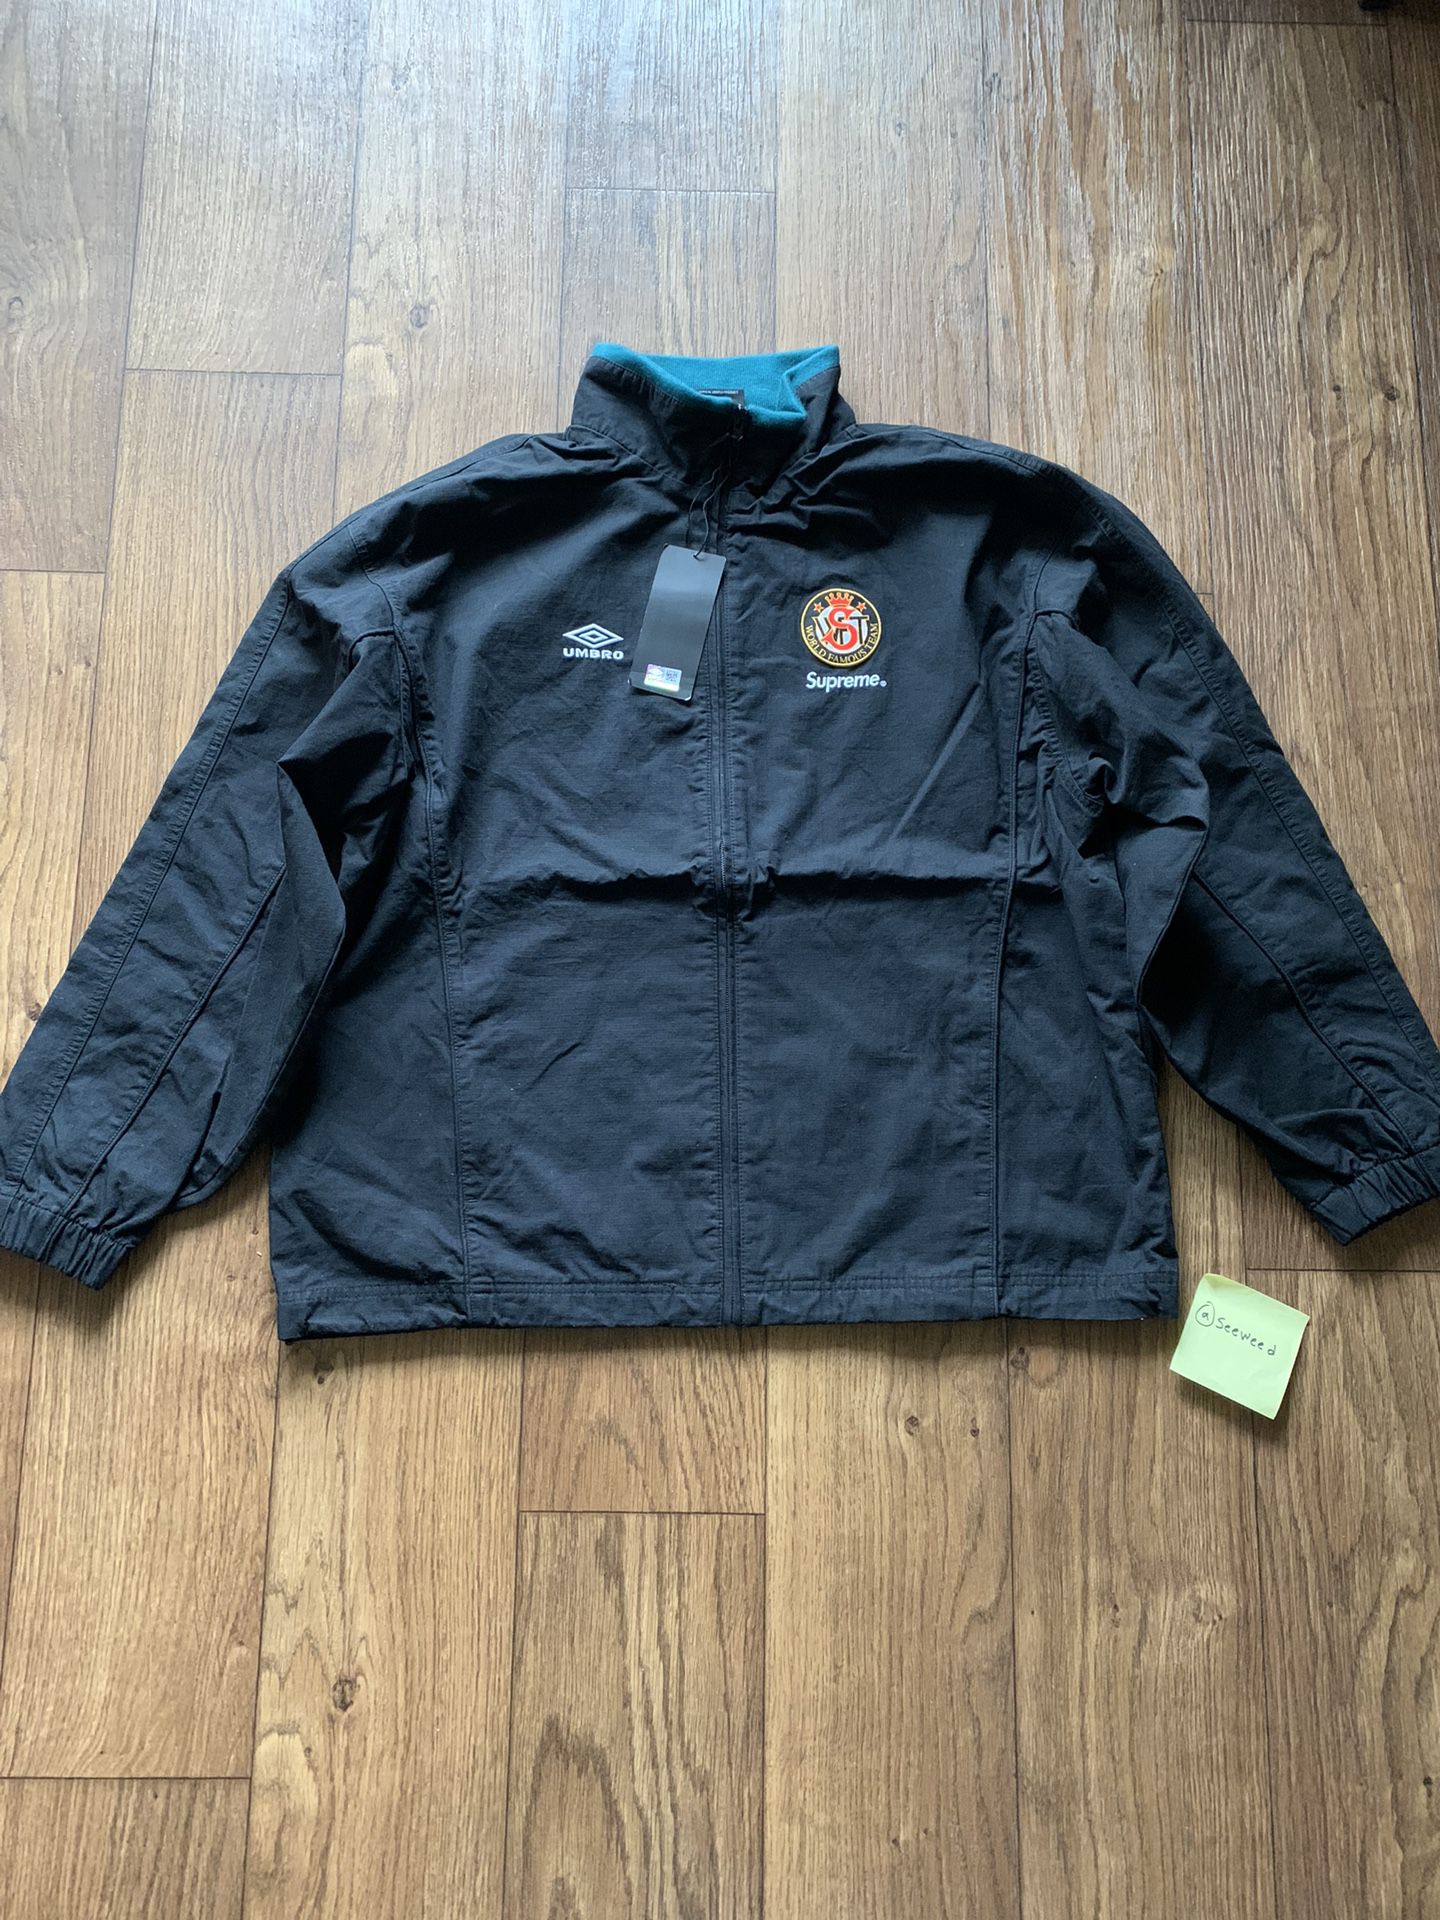 Supreme Umbro Cotton Ripstop Track Jacket Black Size Medium